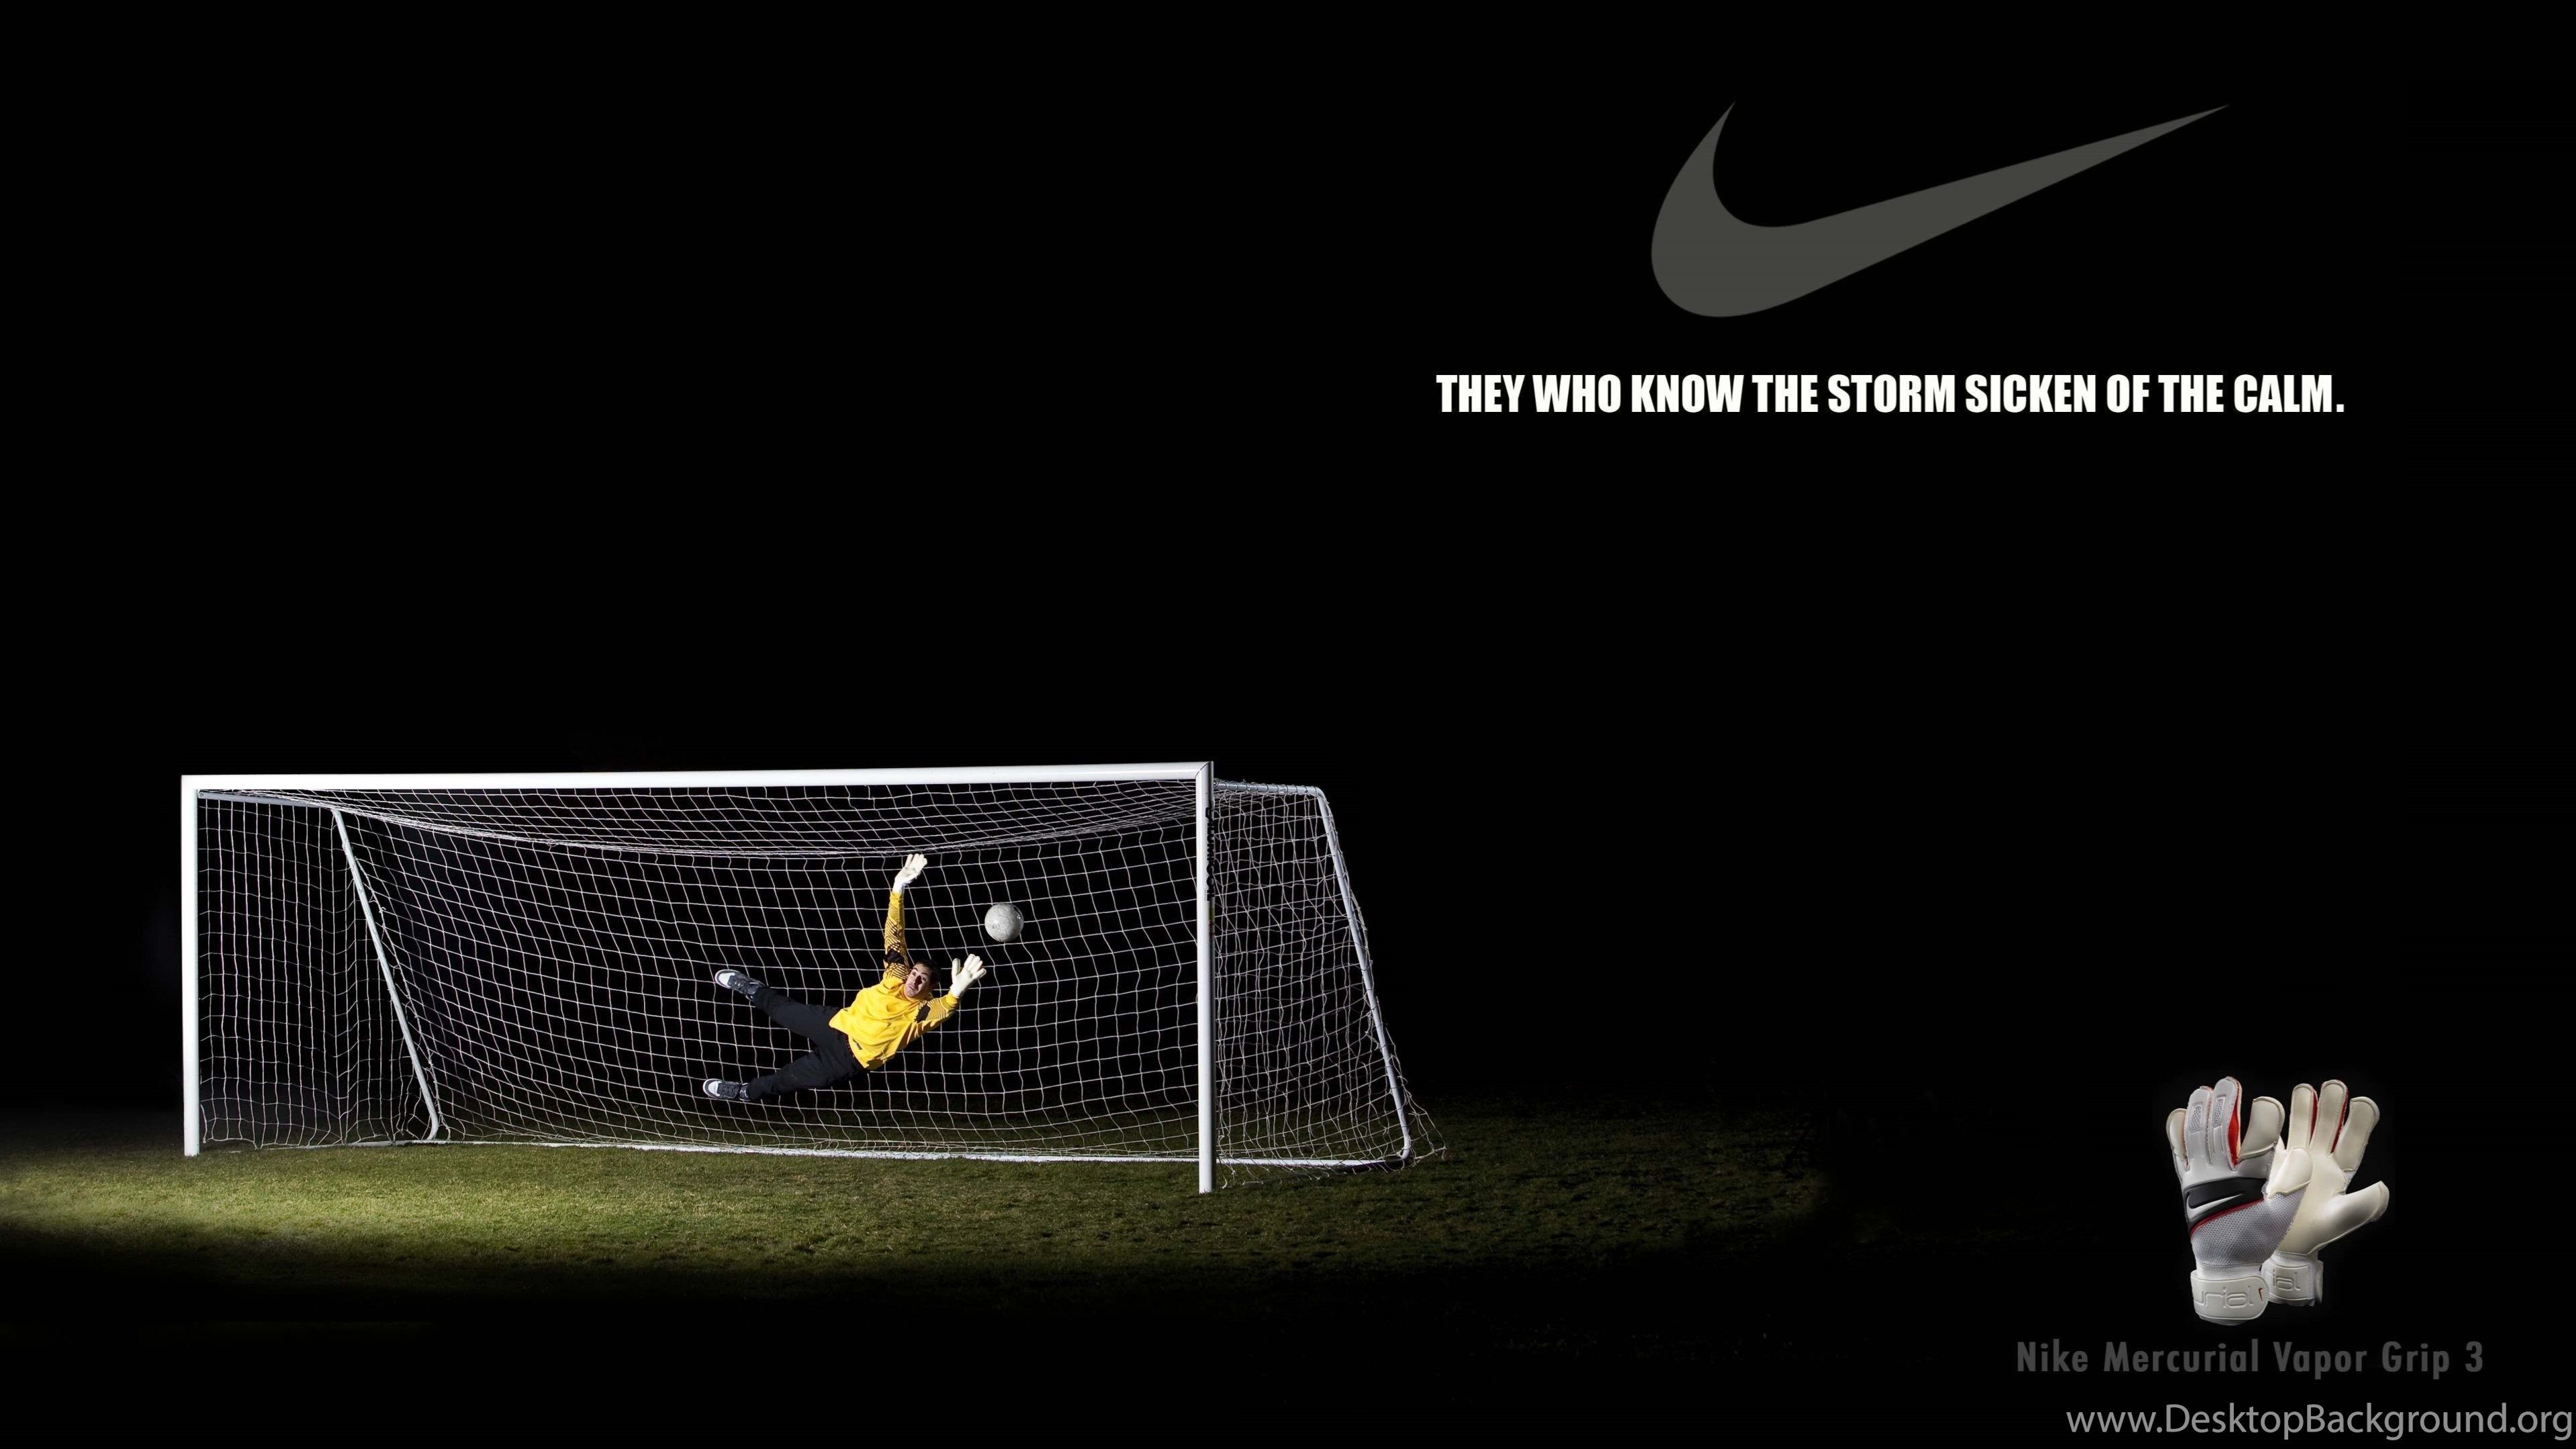 Nike Soccer Poster Uhd Wallpaper Ultra High Definition. Desktop Background